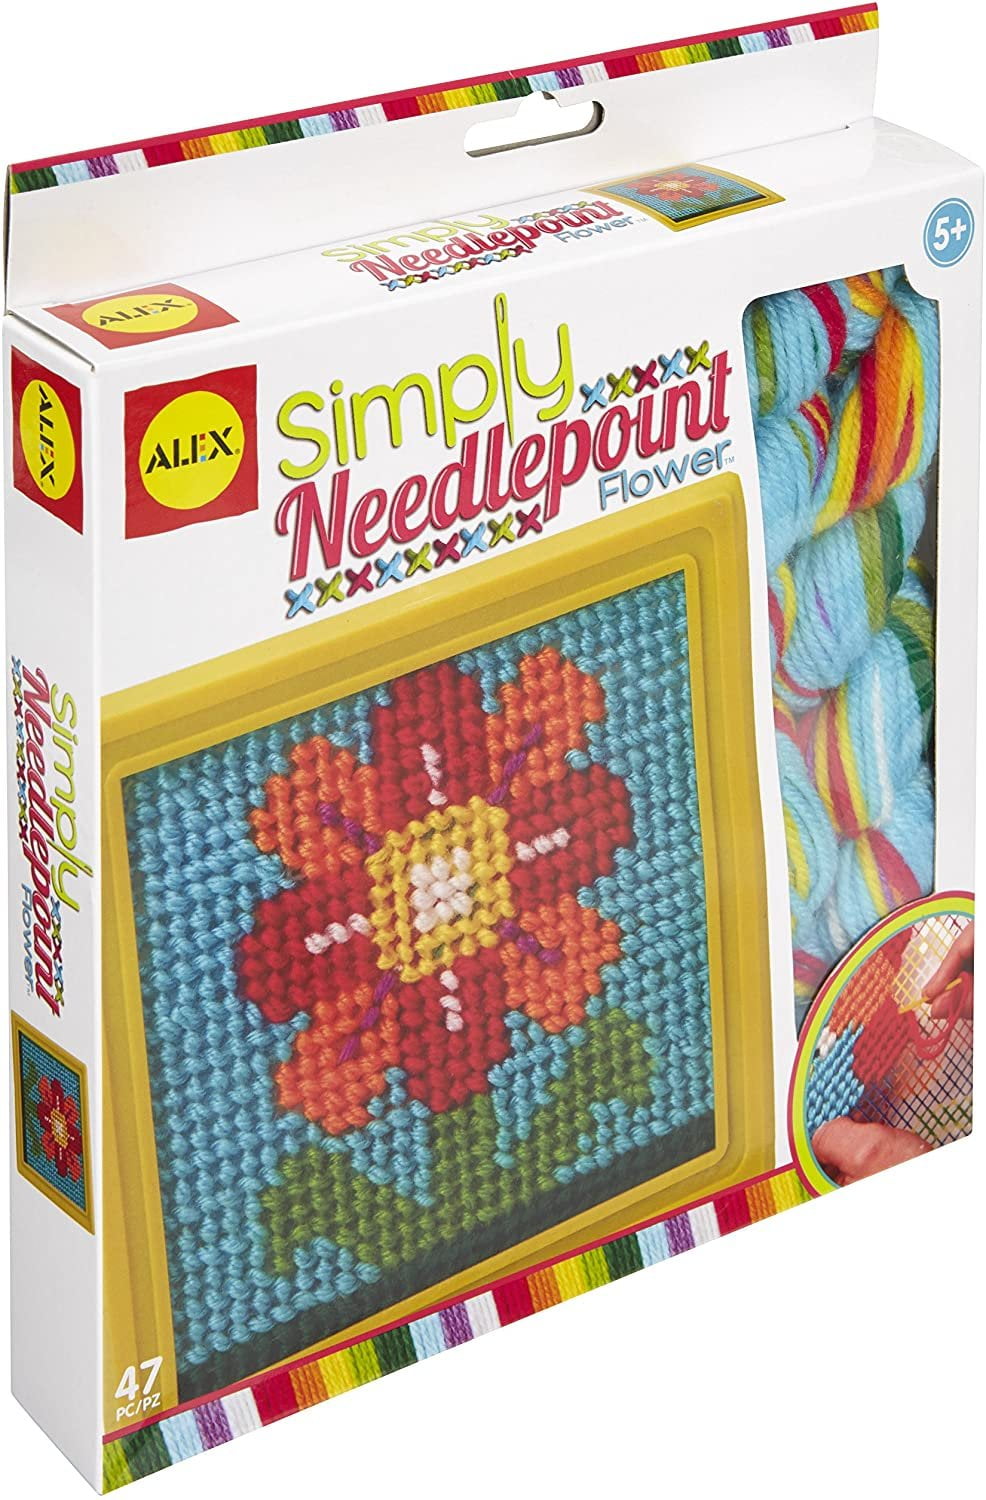 Alex Simply Needlepoint - Flower